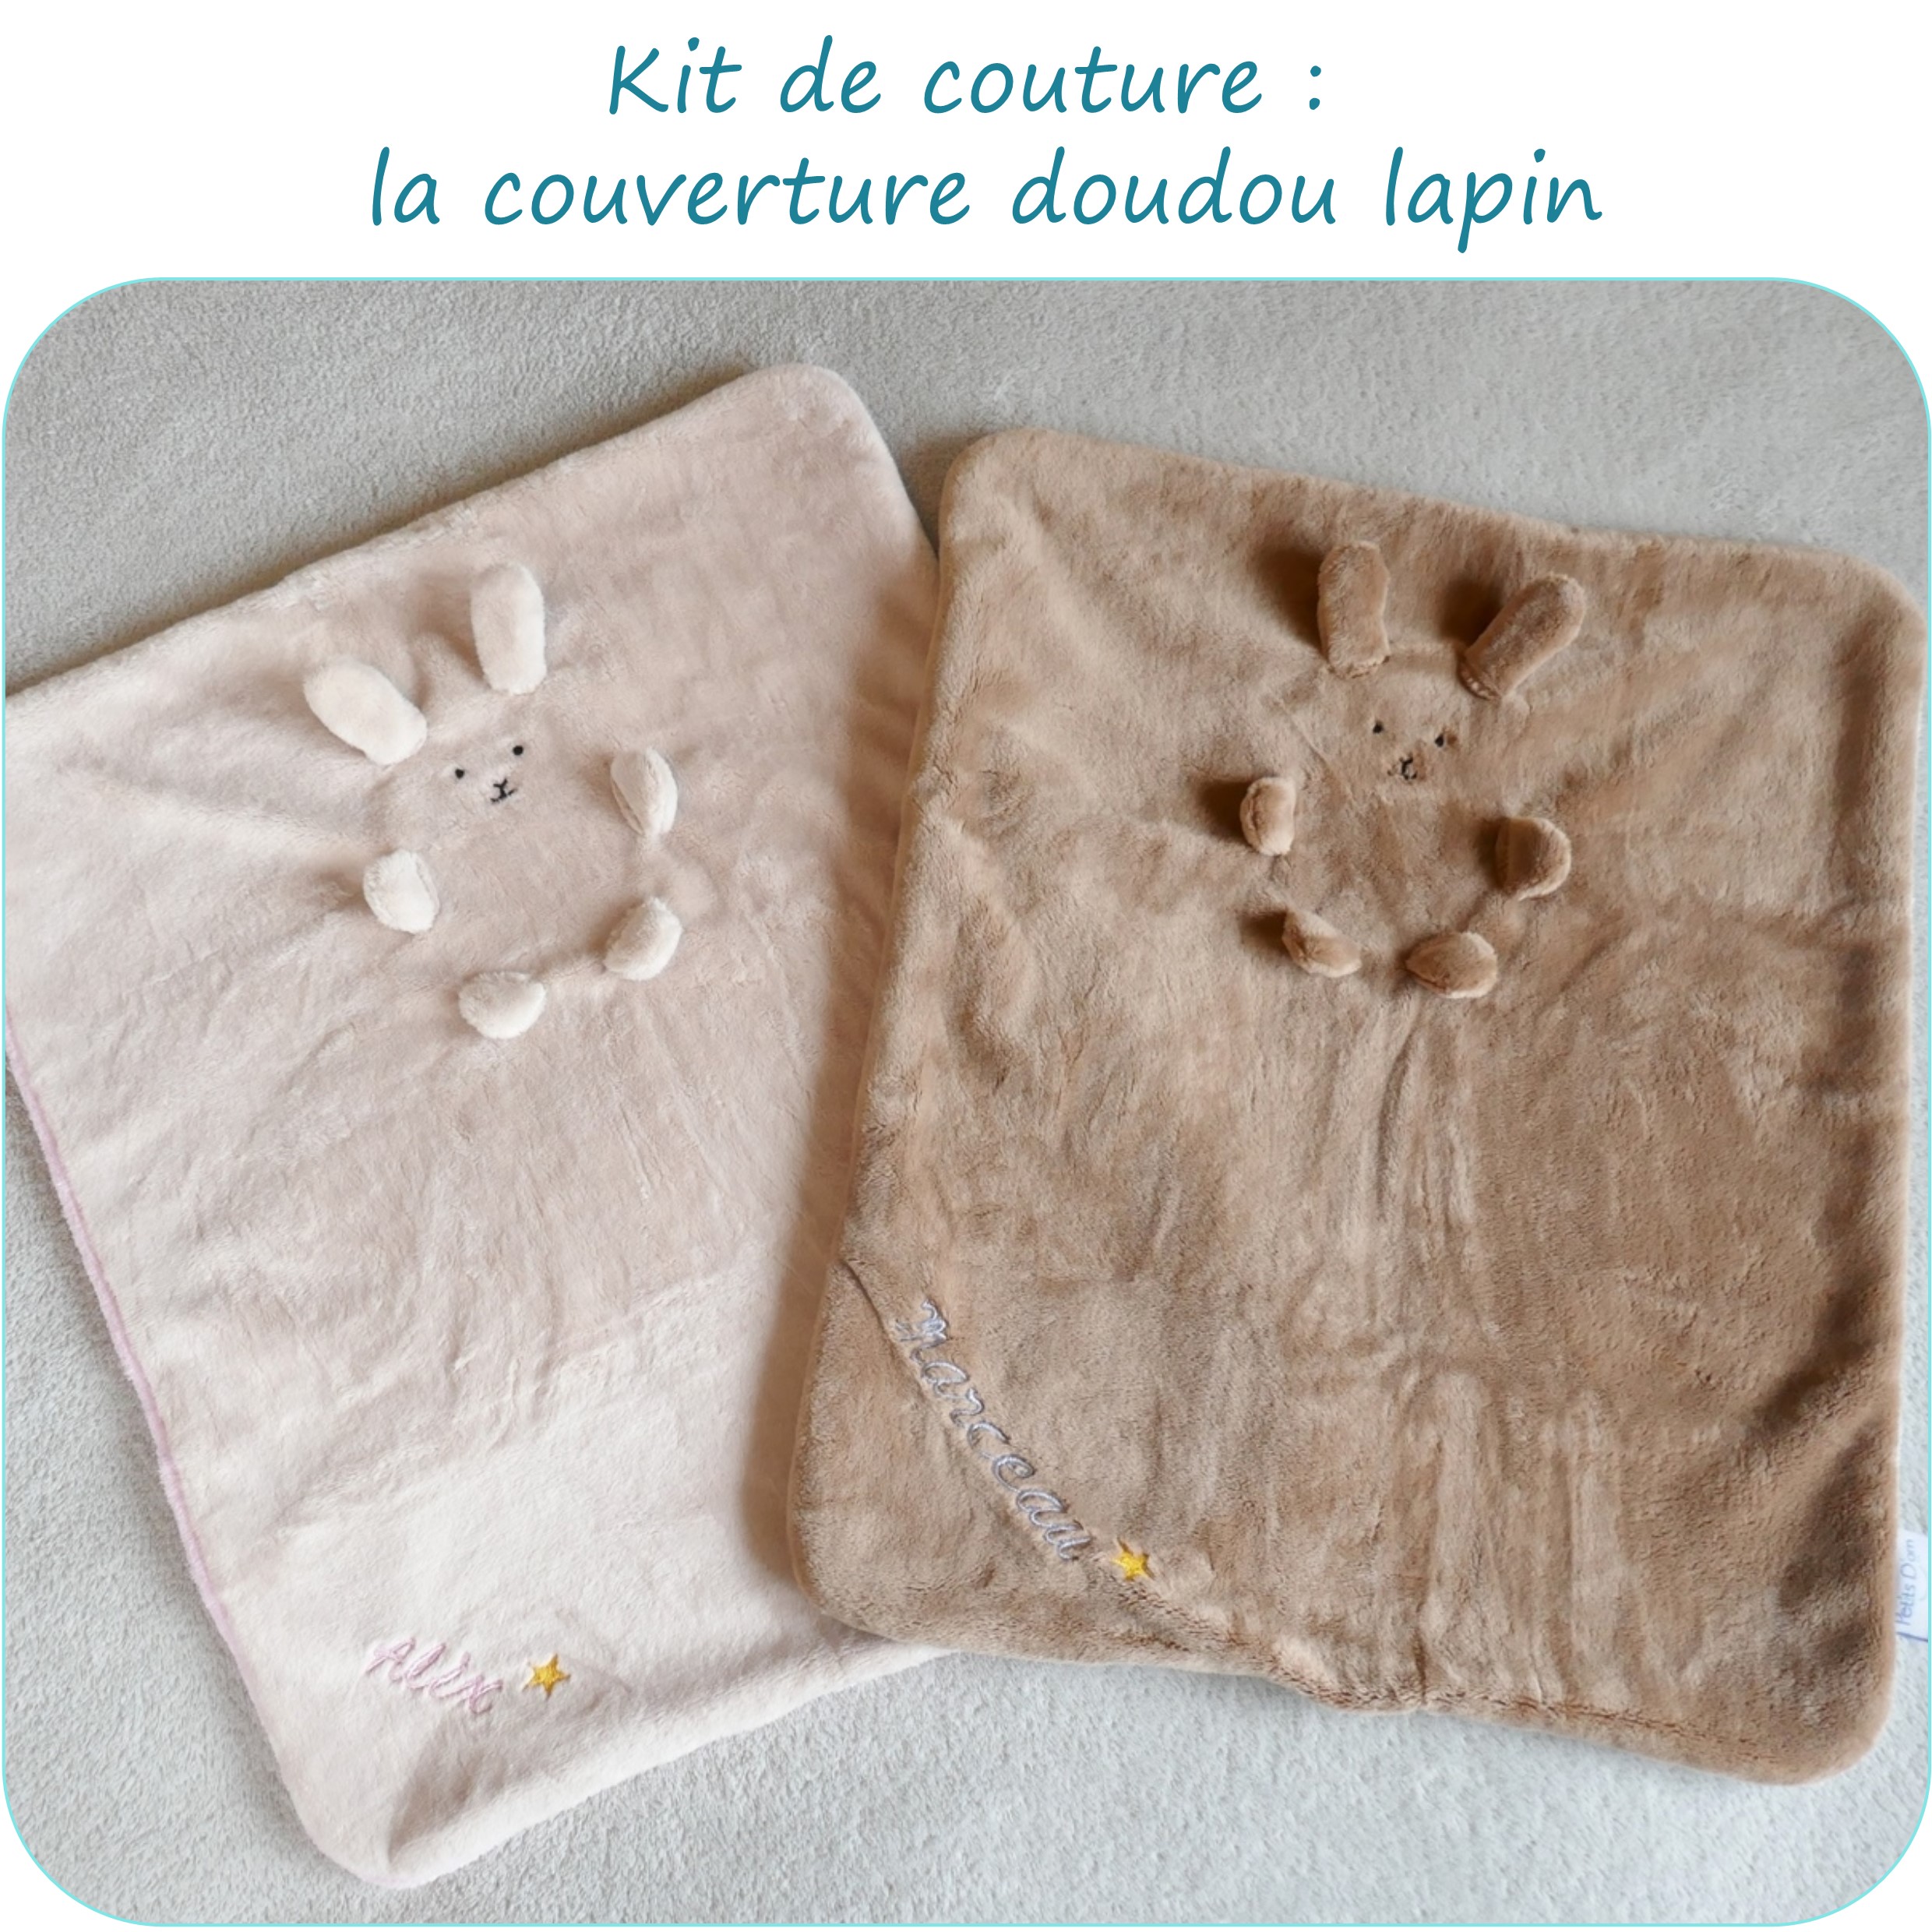 kit couture couverture doudou lapin